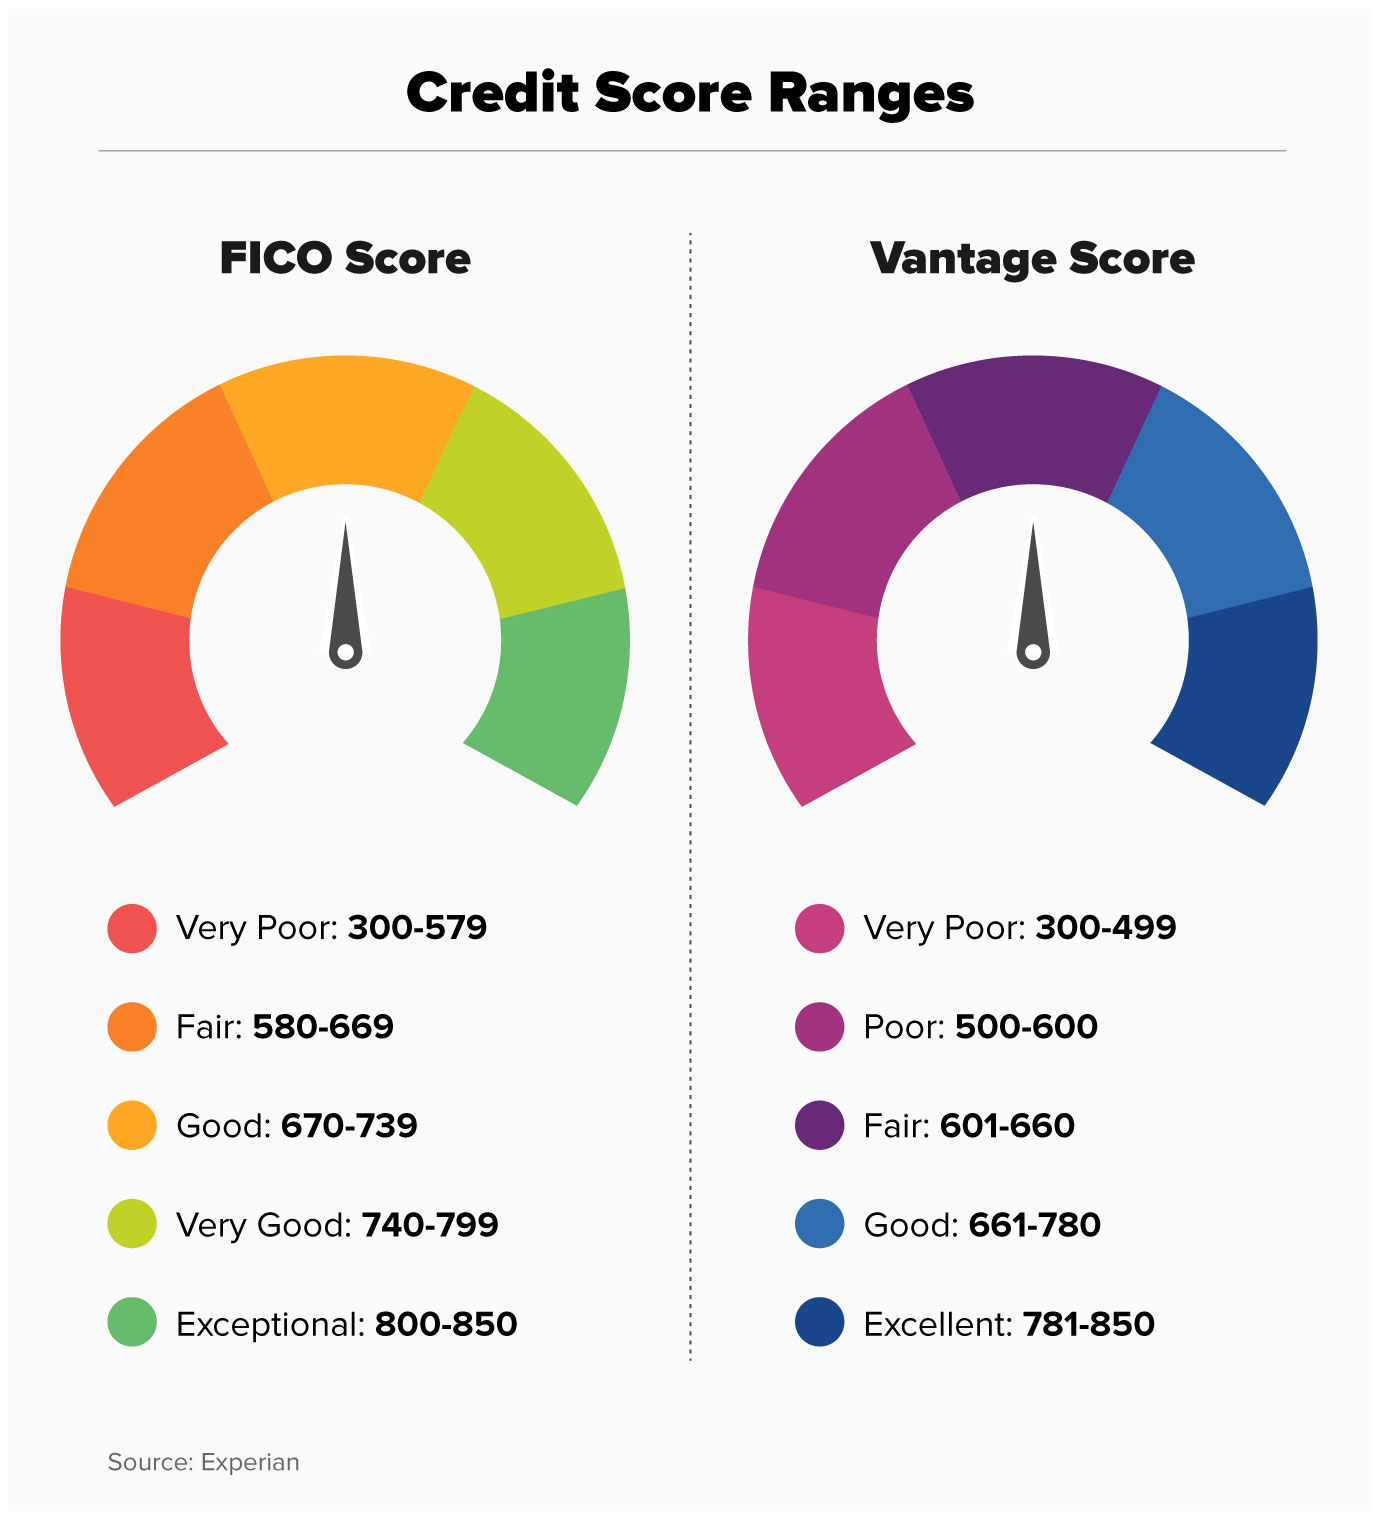 Credit Score ranges